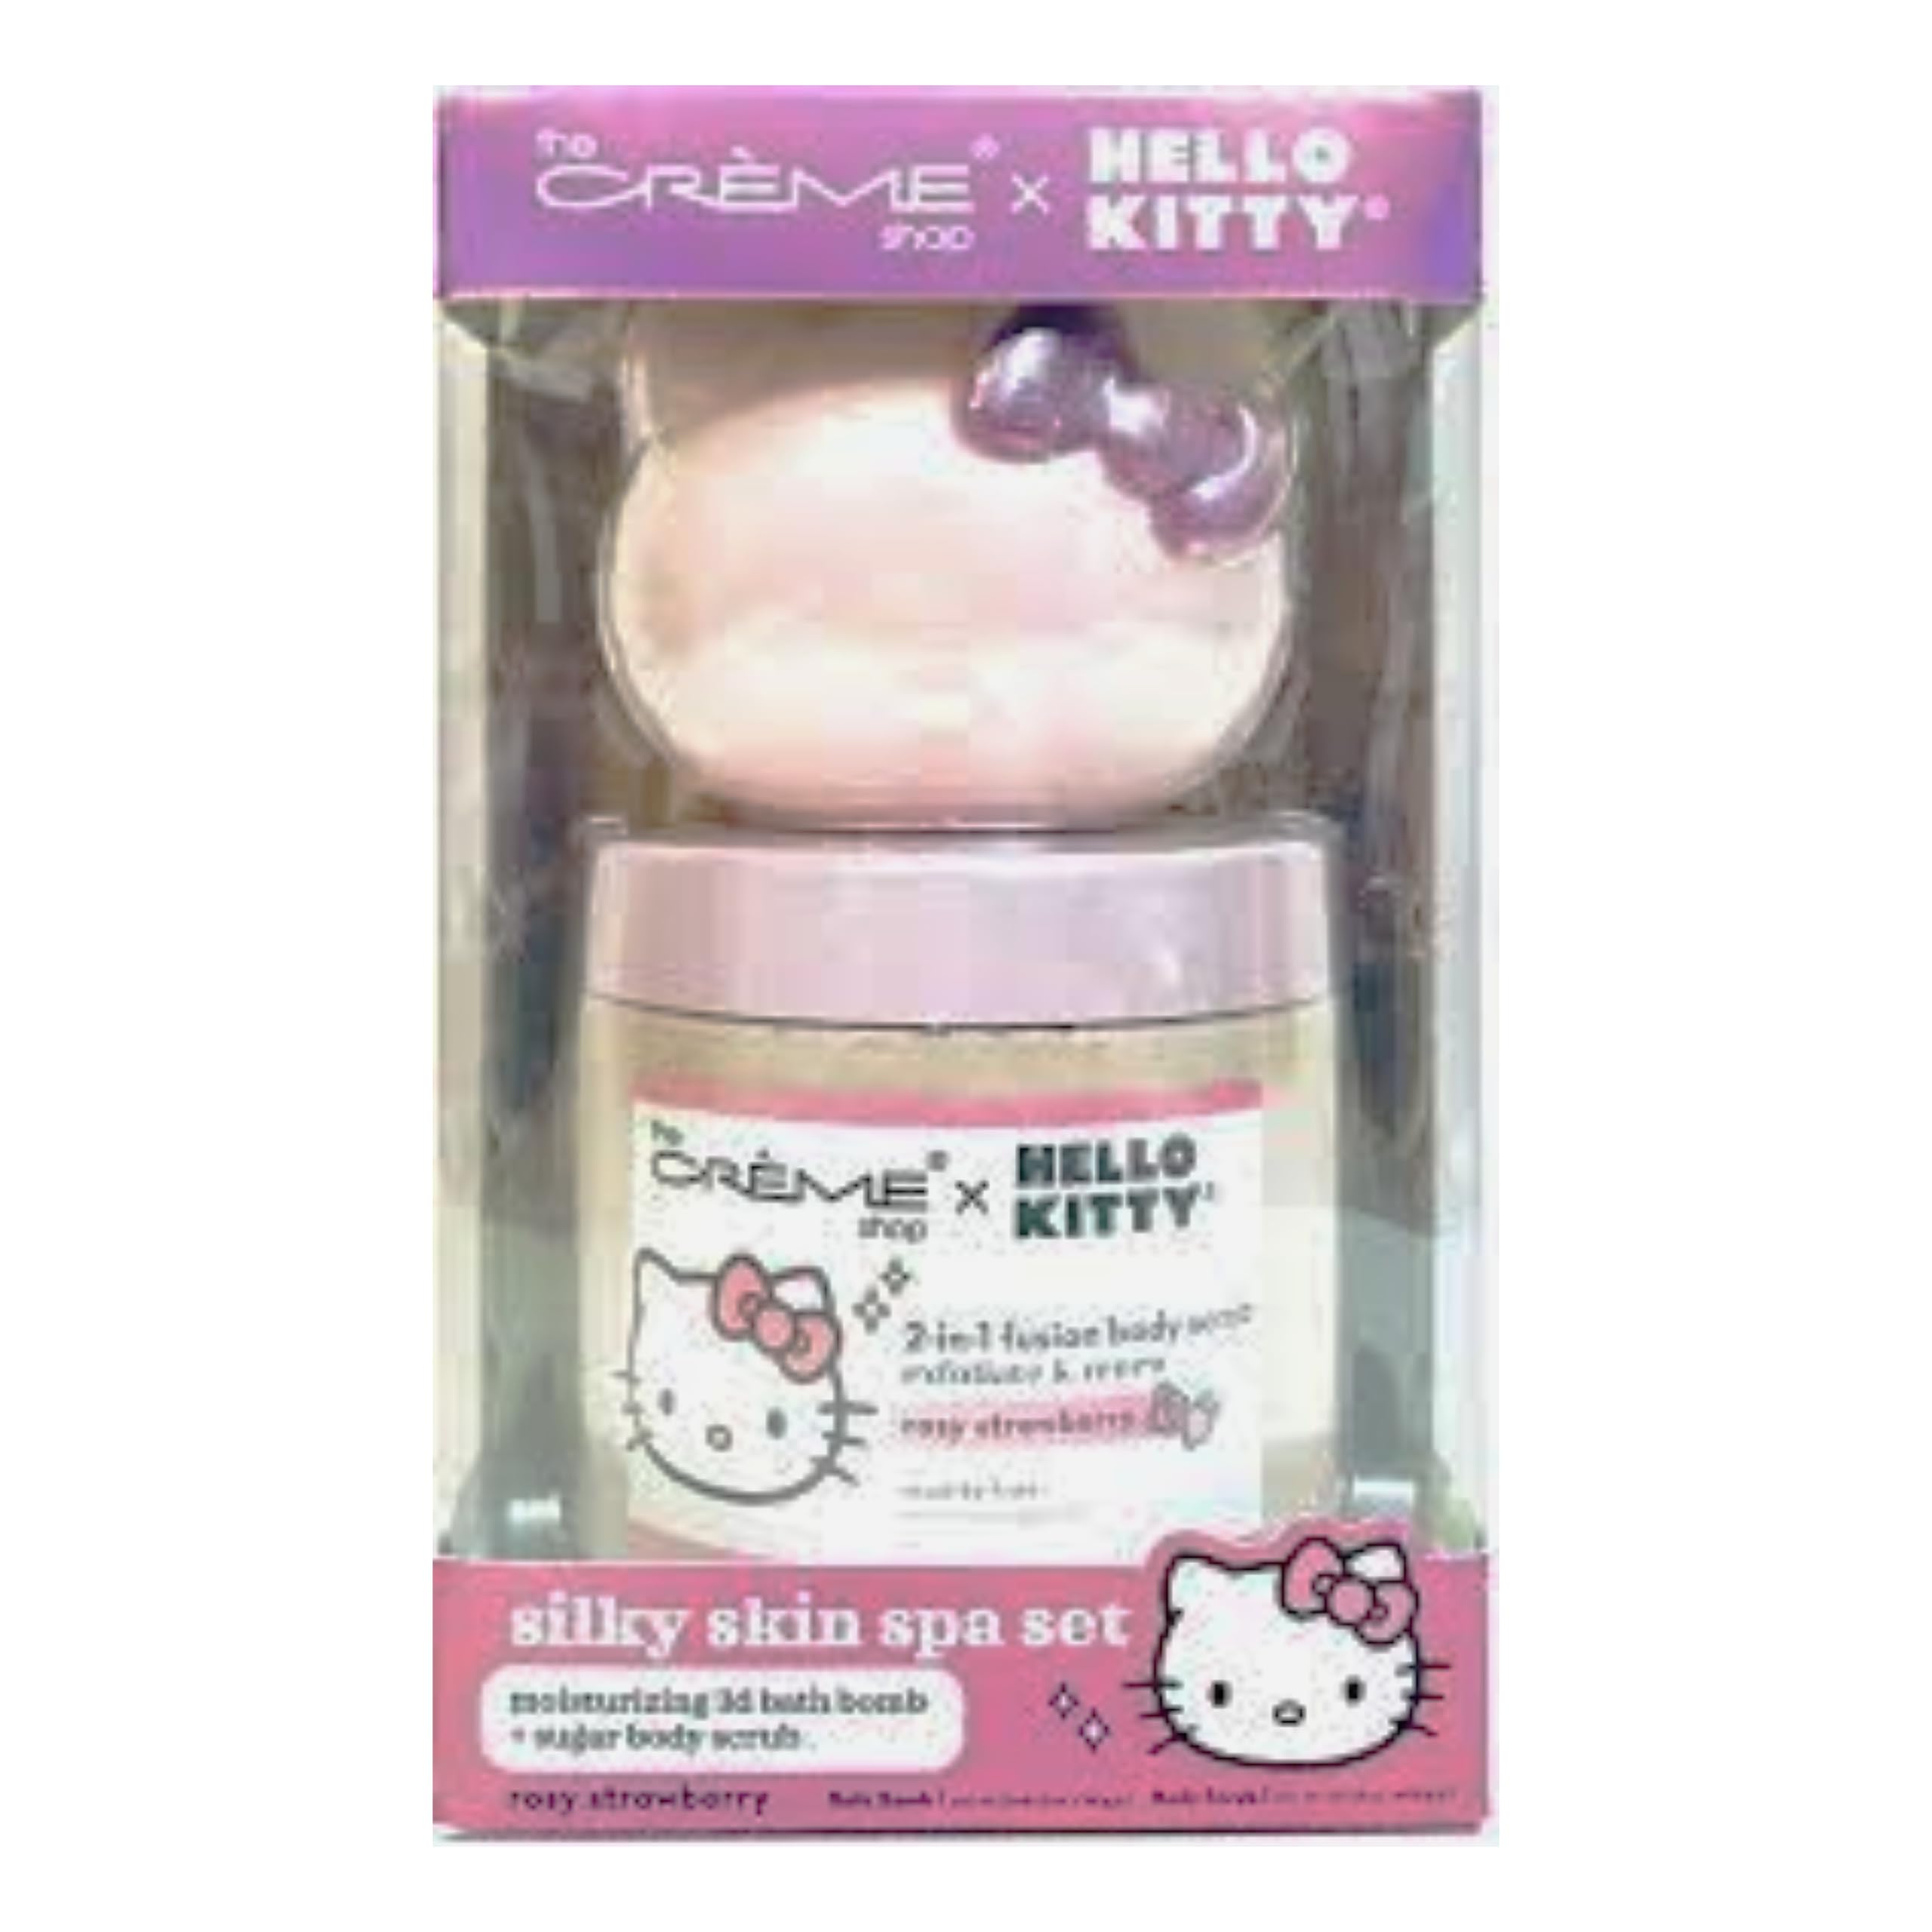 The Creme Shop Hello Kitty Silky Skin Spa Set - Bath Bomb & Body Scrubs for Radiant Silky Skin - Moisturizing Bath Bomb & Sugar Body Scrub - Indulge in Your at-Home Spa Kit – Strawberry